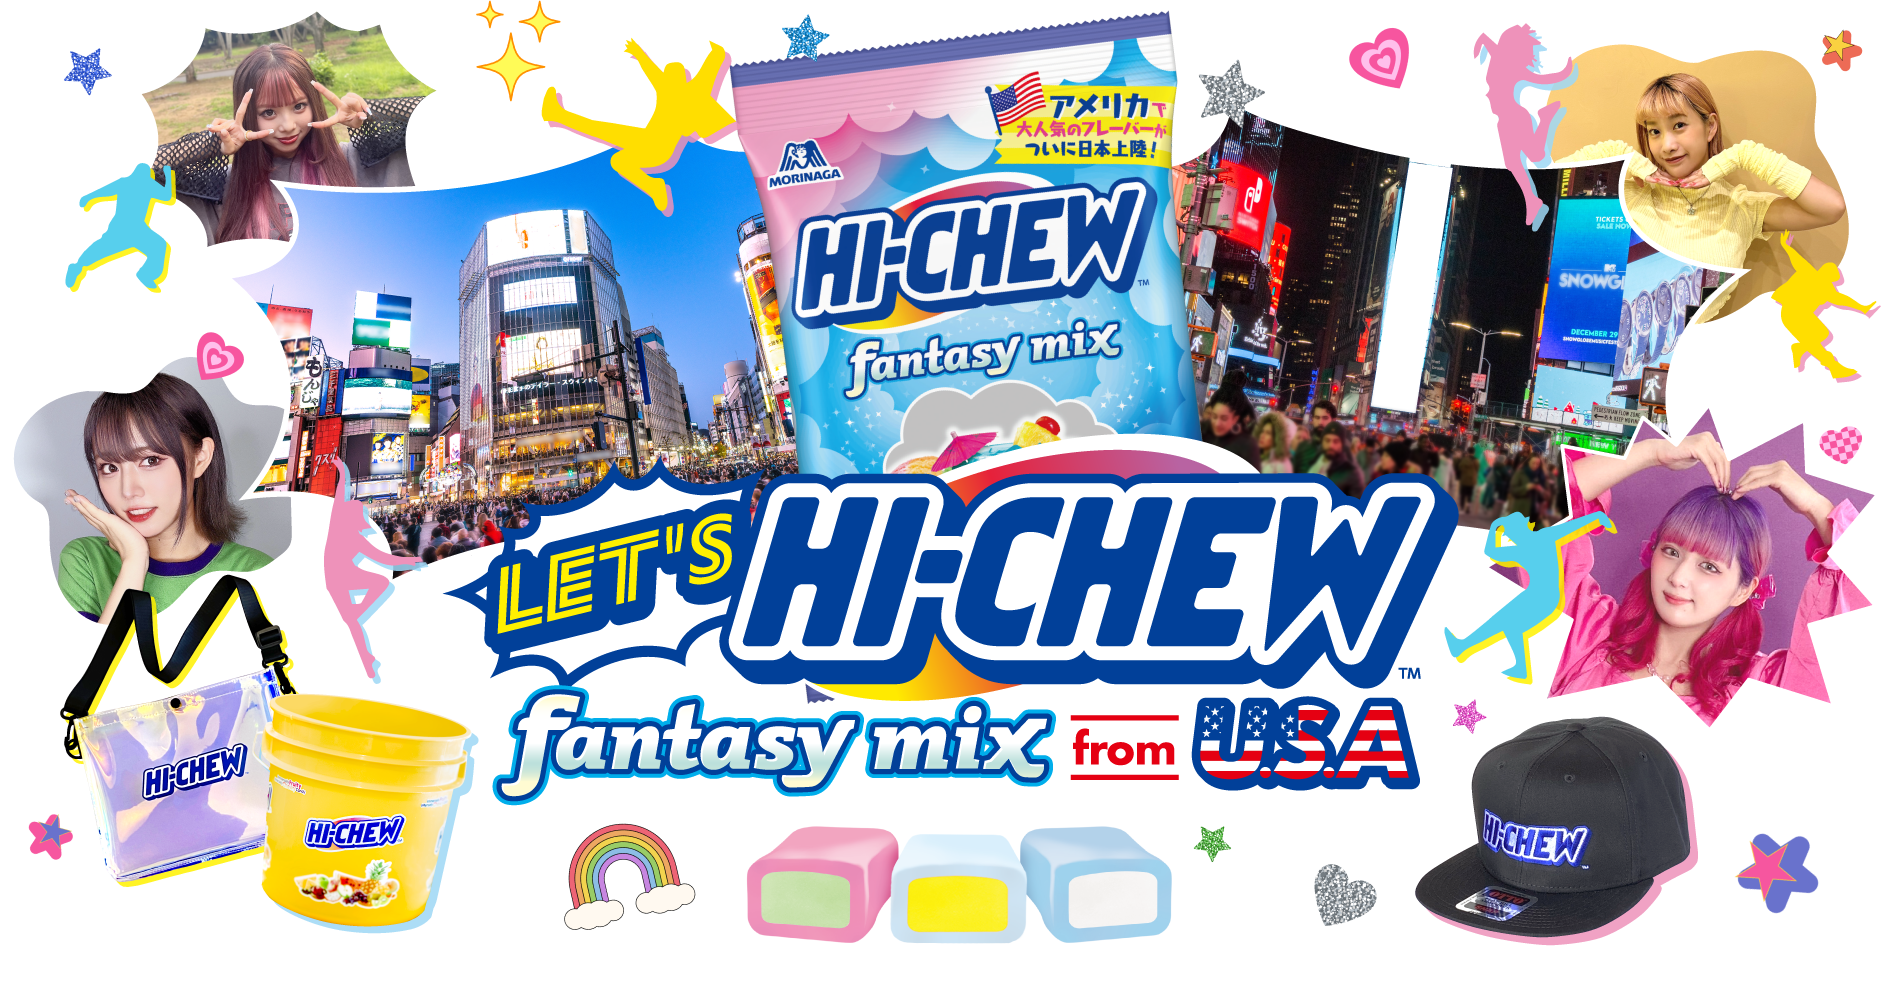 Let's HI-CHEW funtasy mix in form USA 3つのキャンペーン開催中